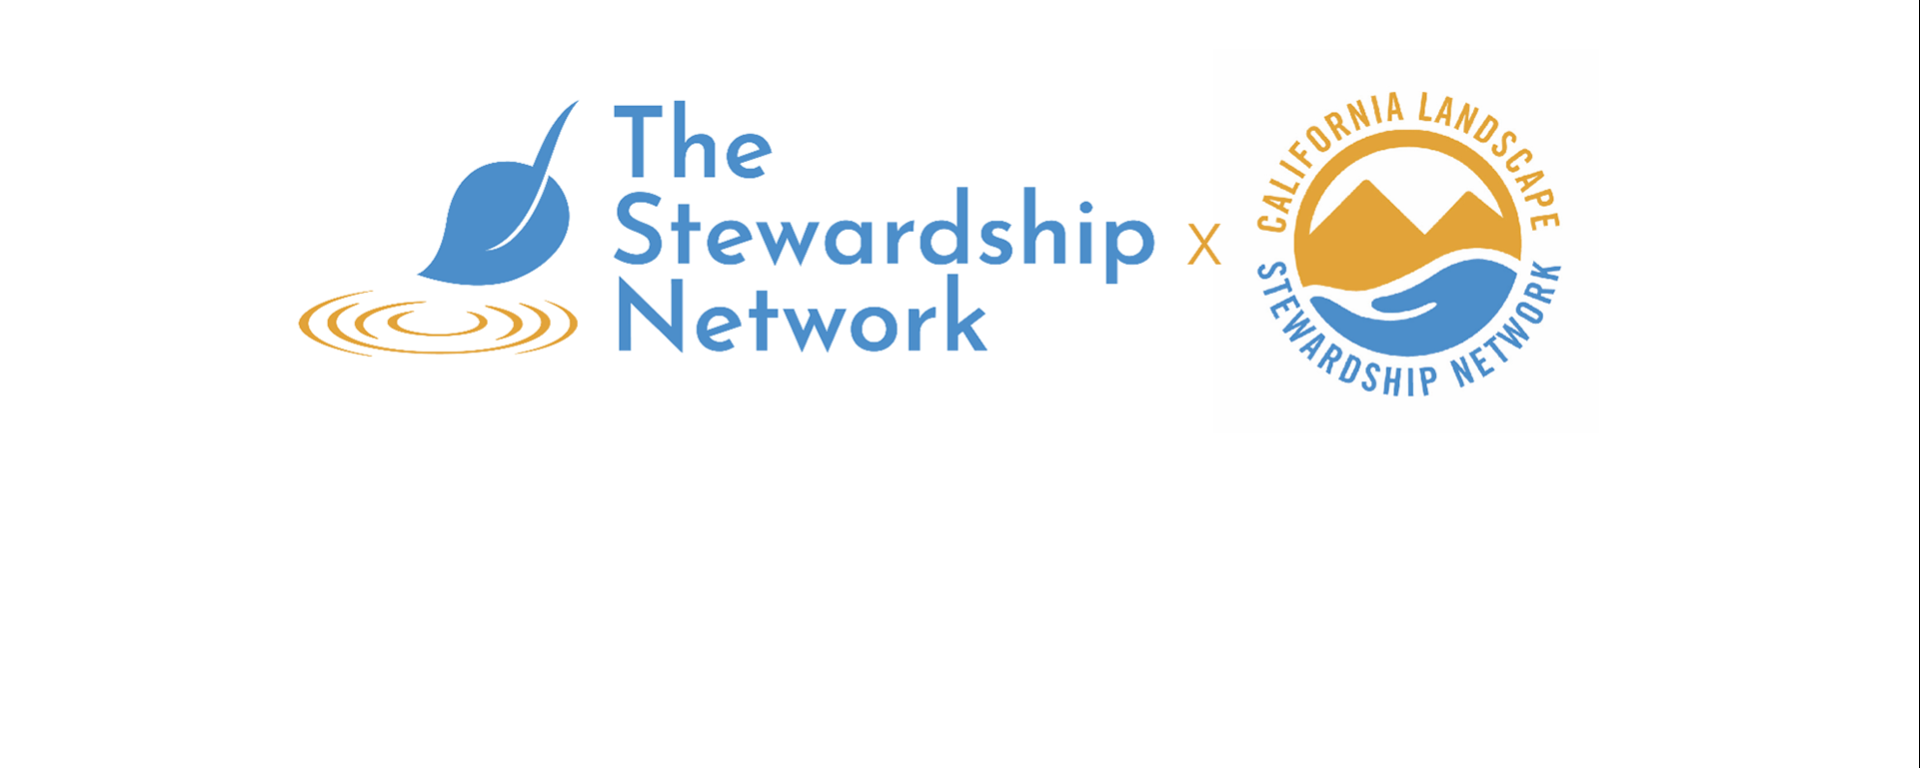 The Stewardship Network X California Landscape Stewardship Network